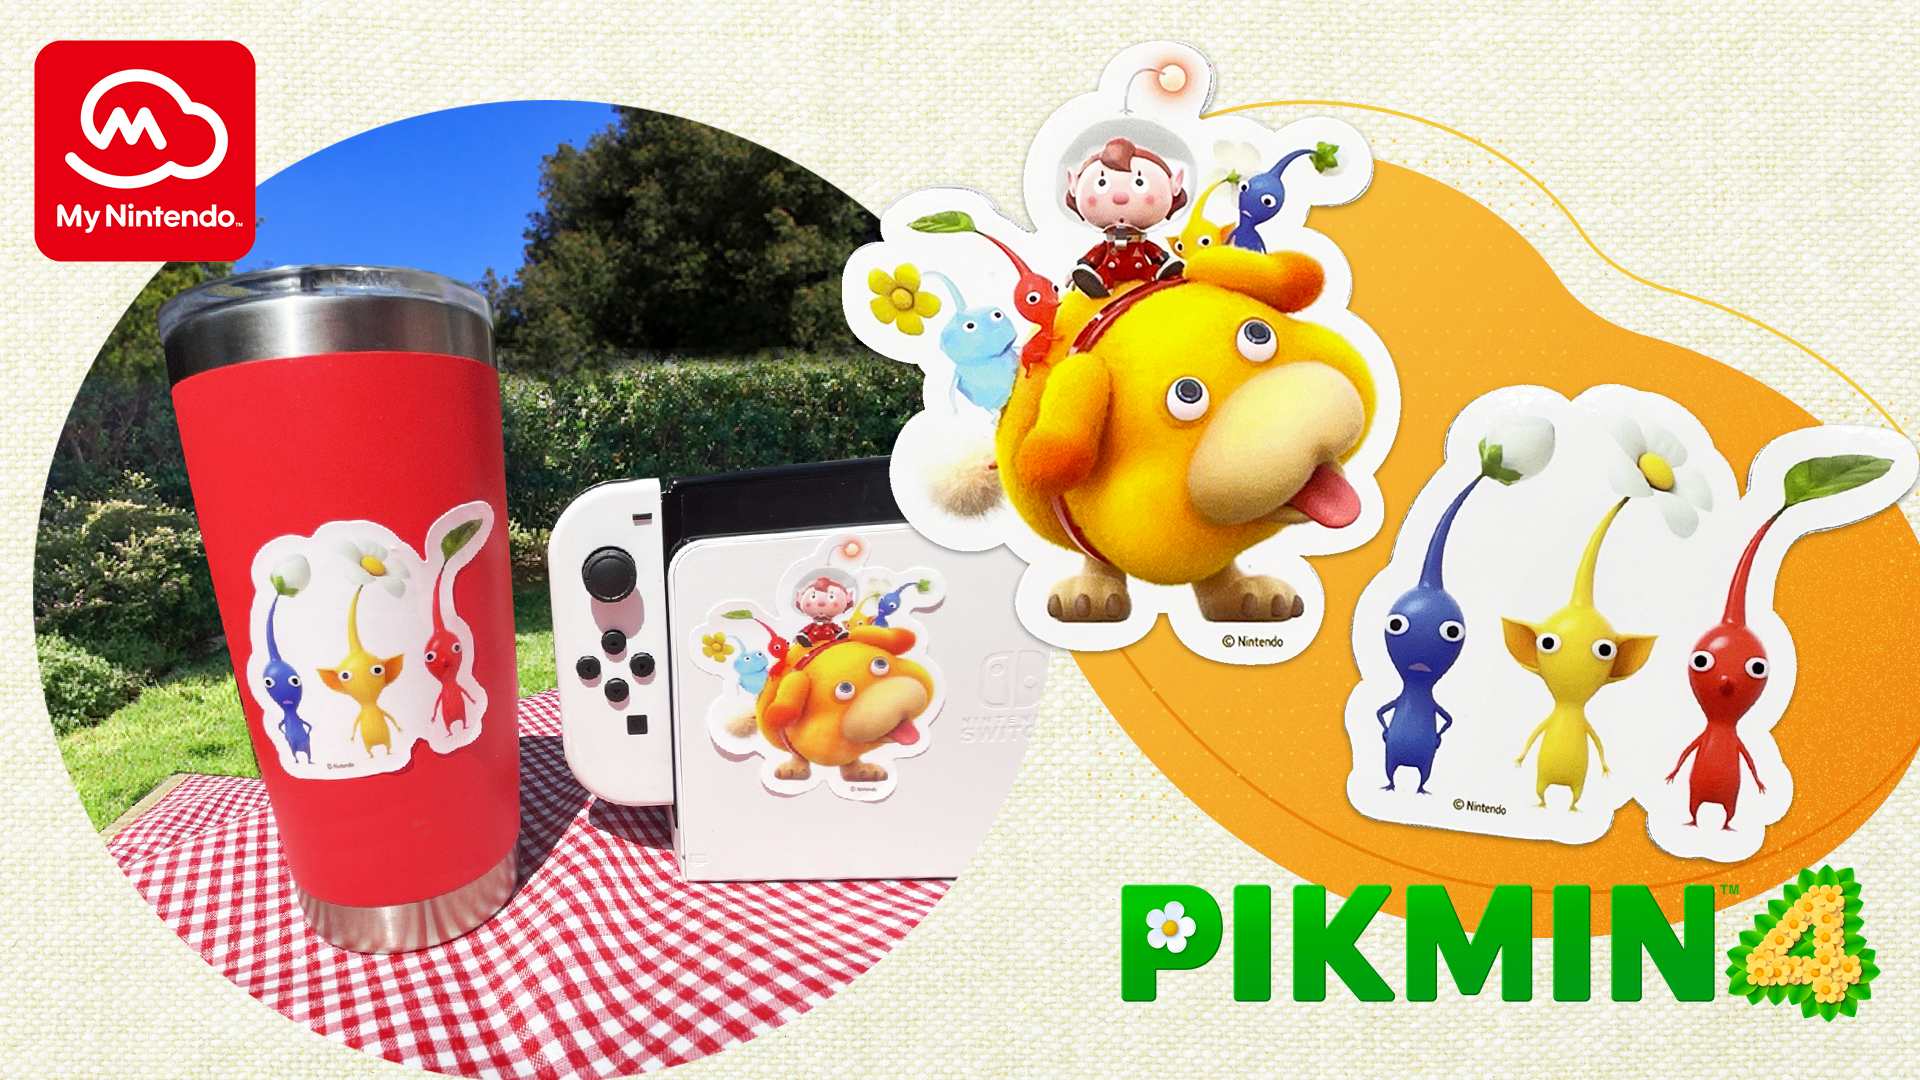 Pikmin 4 previews go live - My Nintendo News